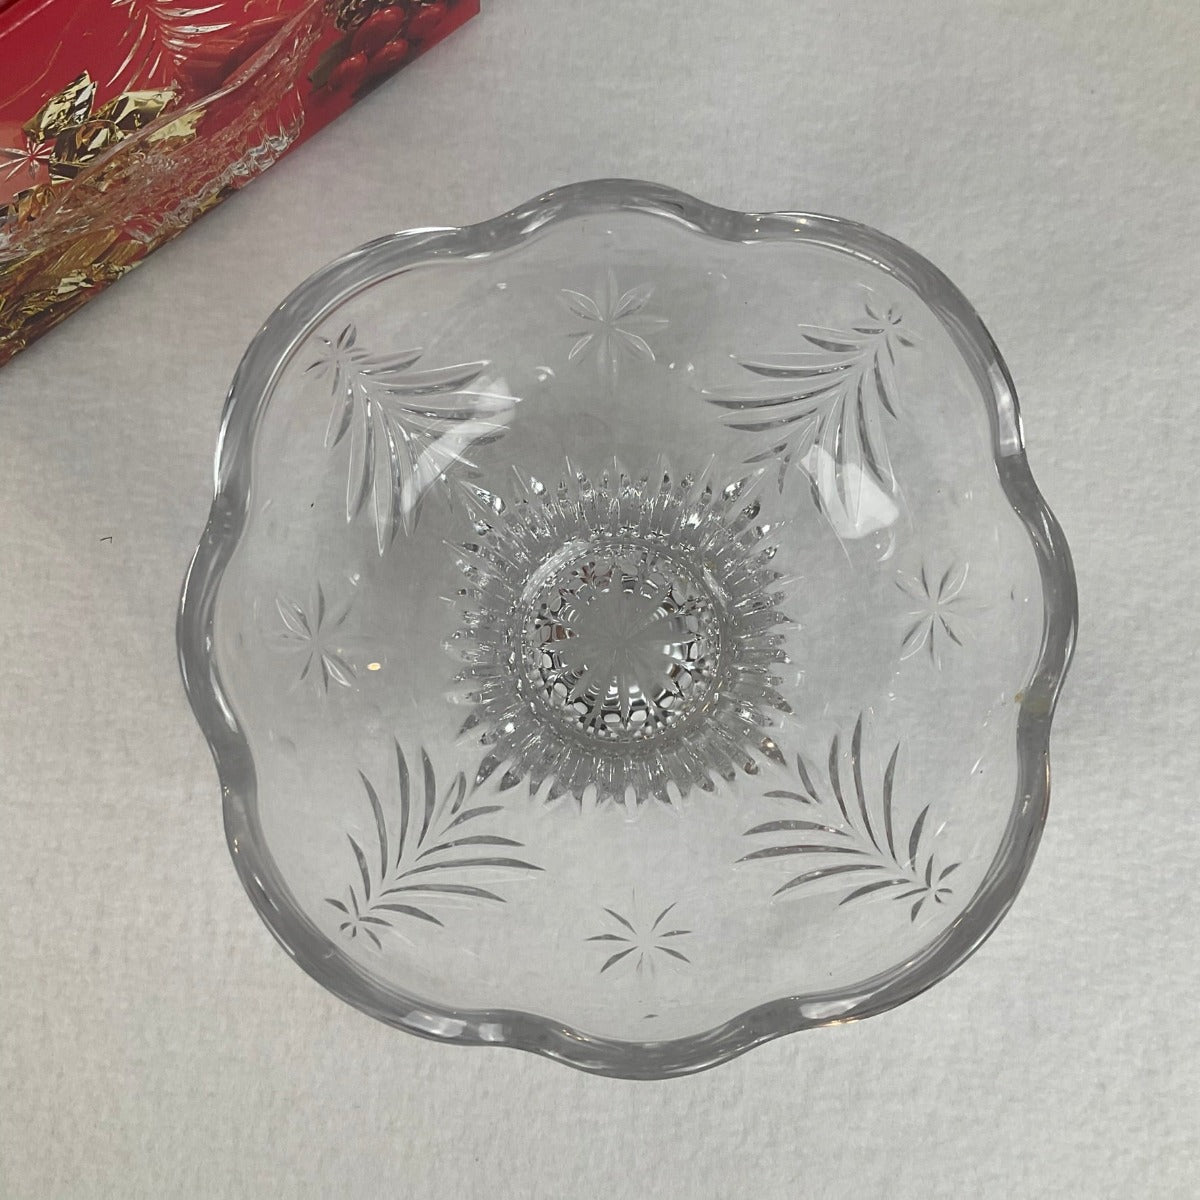 Mikasa Crystal Bowl - Christmas Night 6-inch Candy Dish - Inside